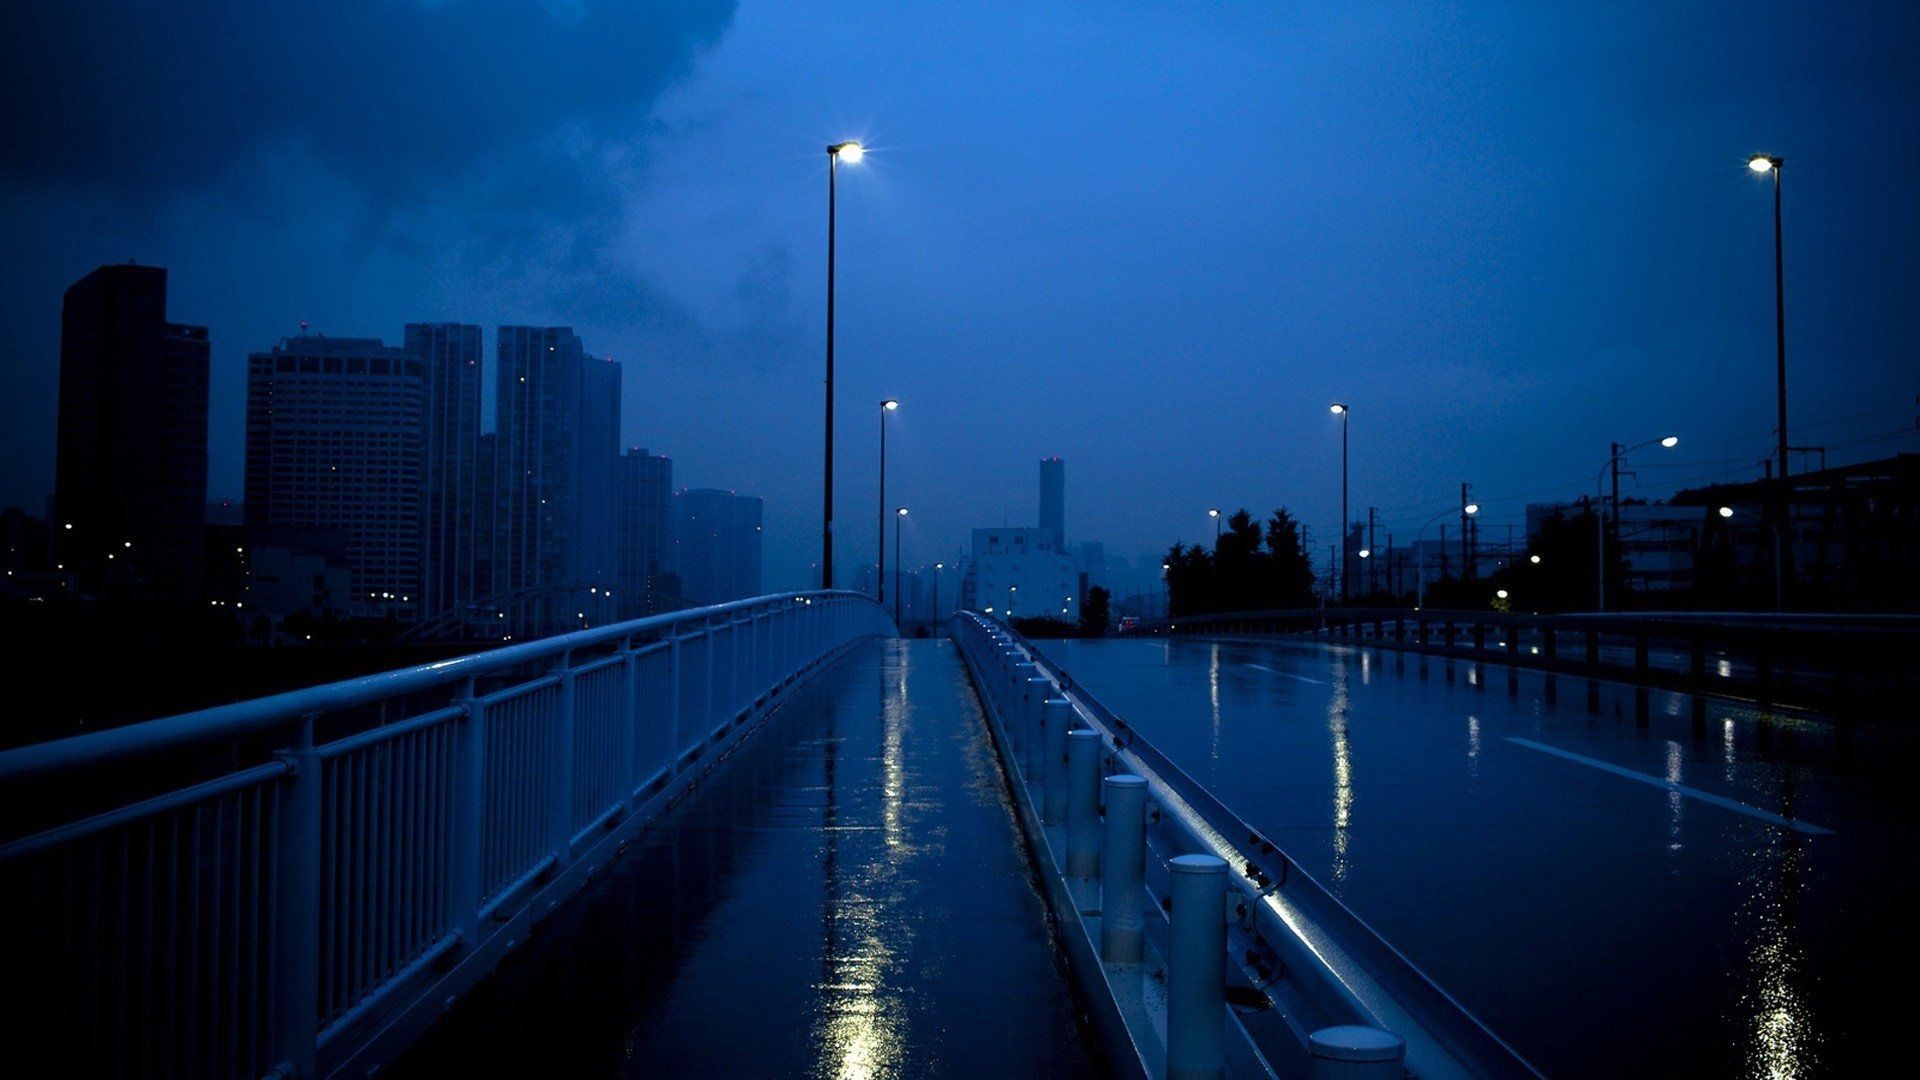 A bridge with lights on it at night - Dark blue